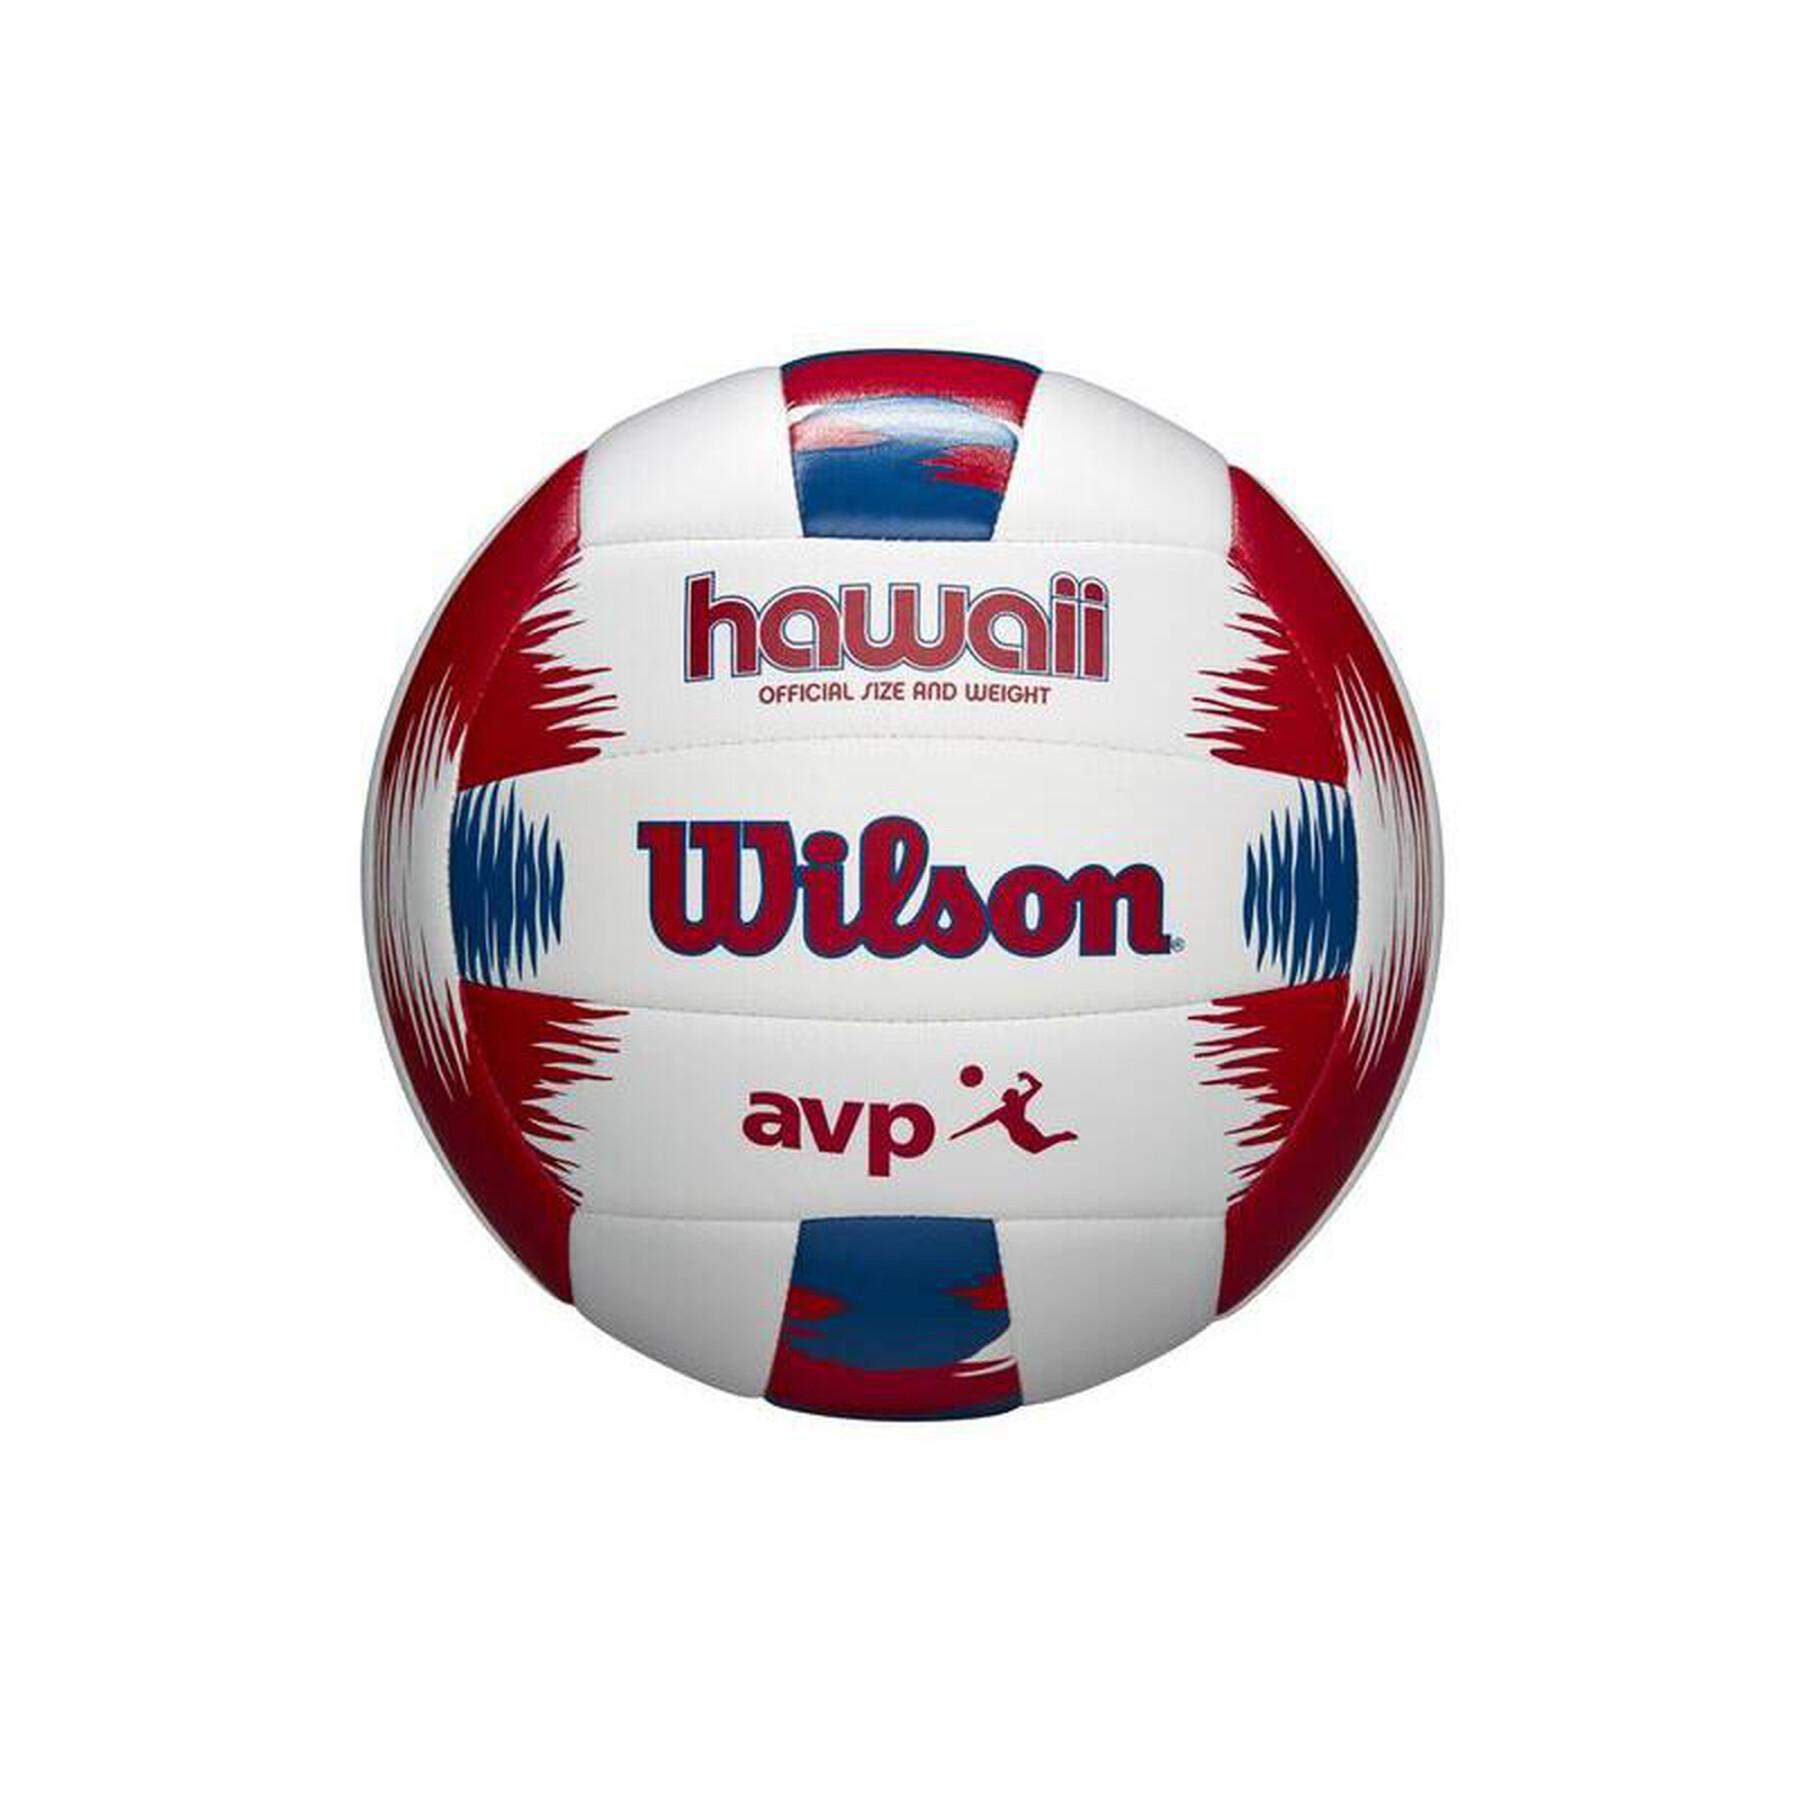 Ballong Wilson Hawaii AVP